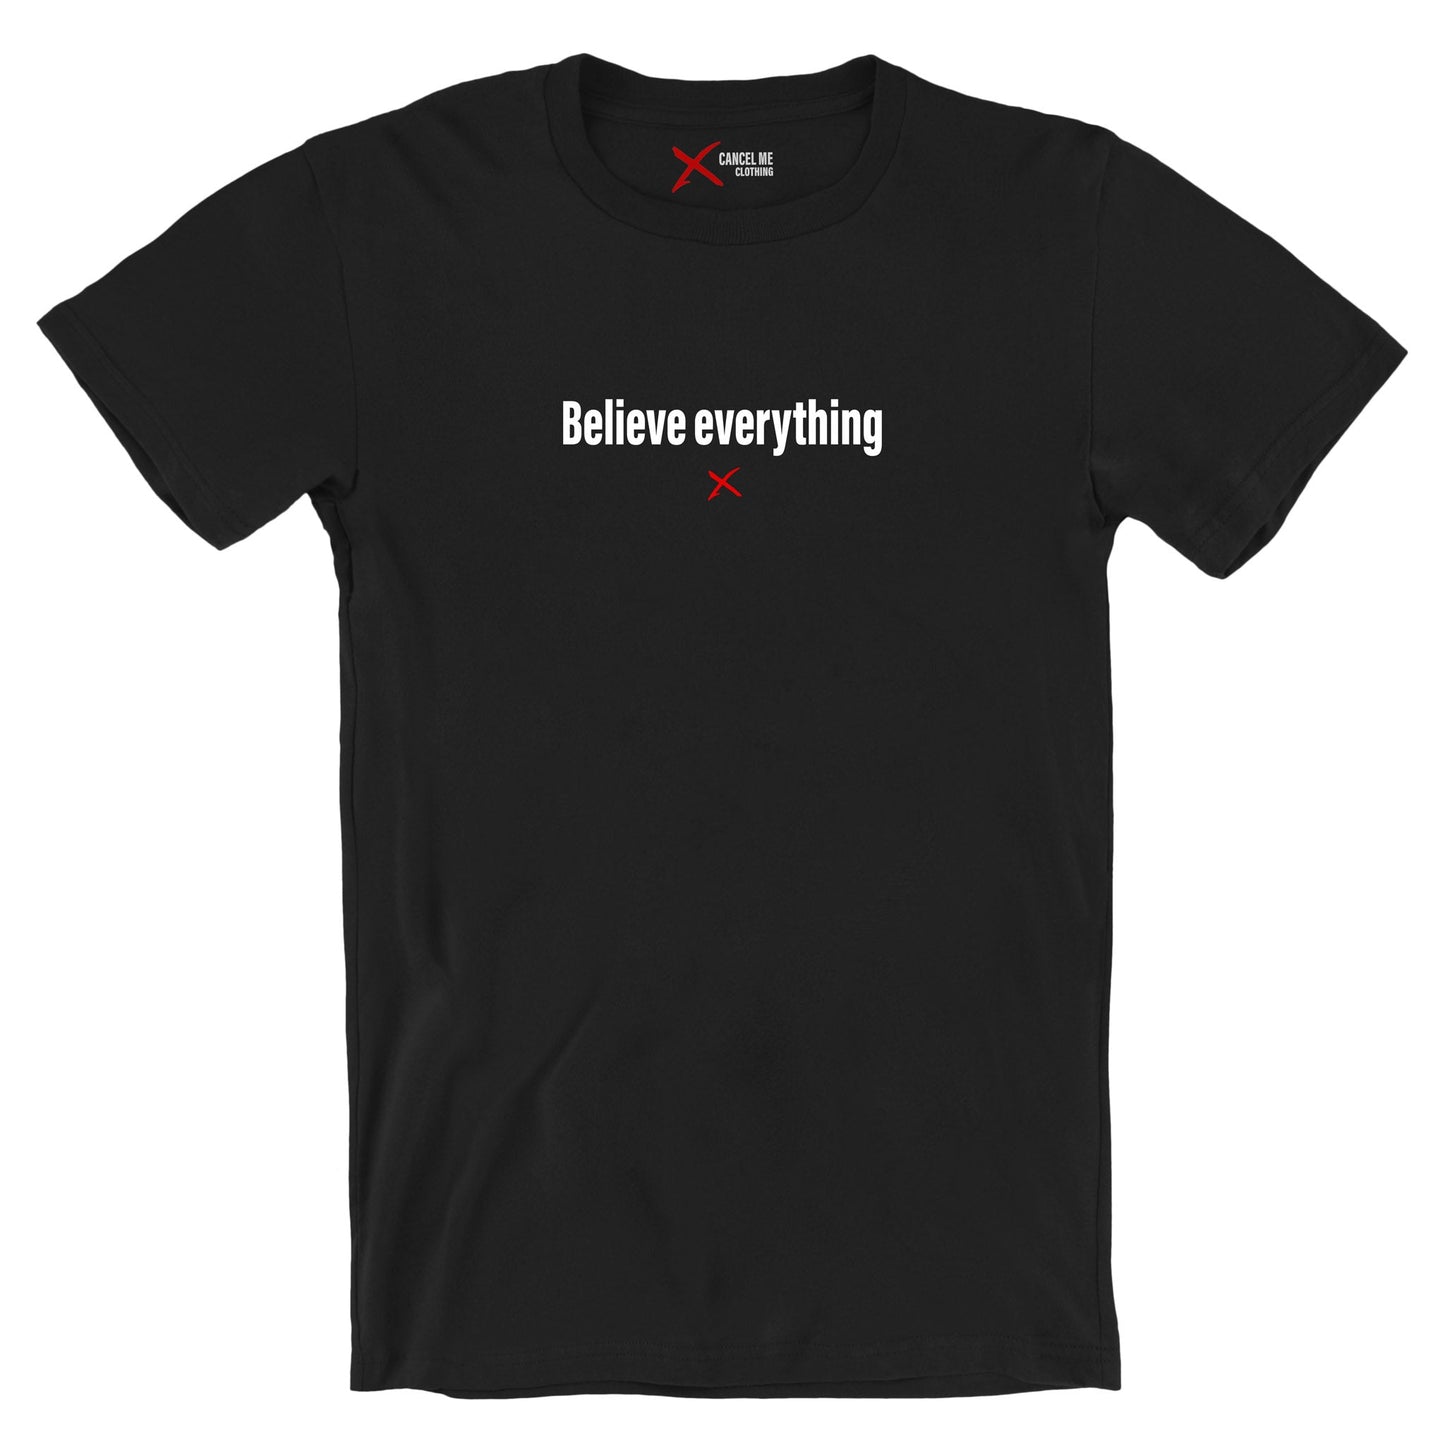 Believe everything - Shirt